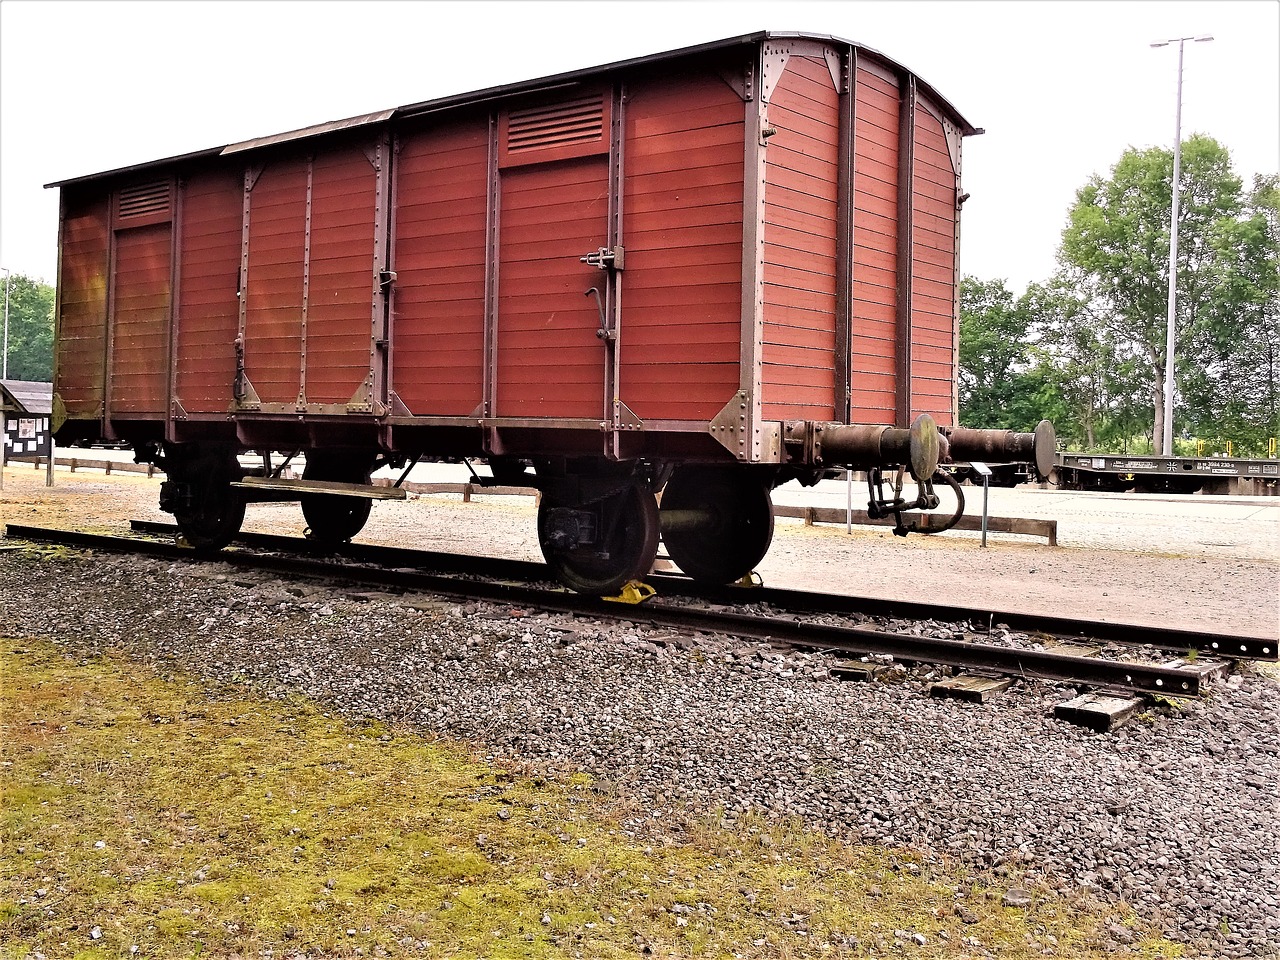 bergen-belsen wagon train free photo